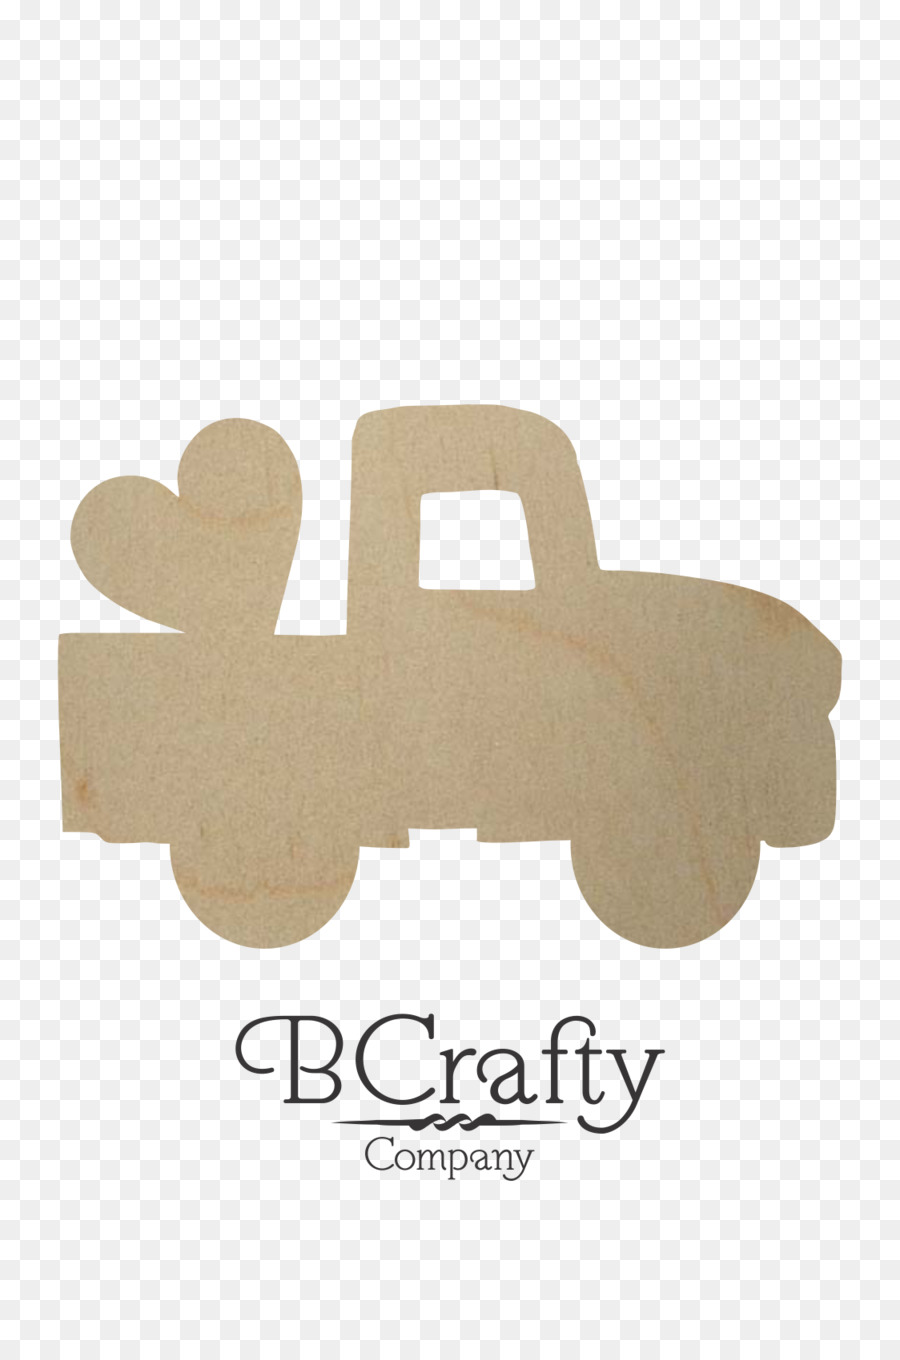 Đón xe BCrafty Logo - xe tải